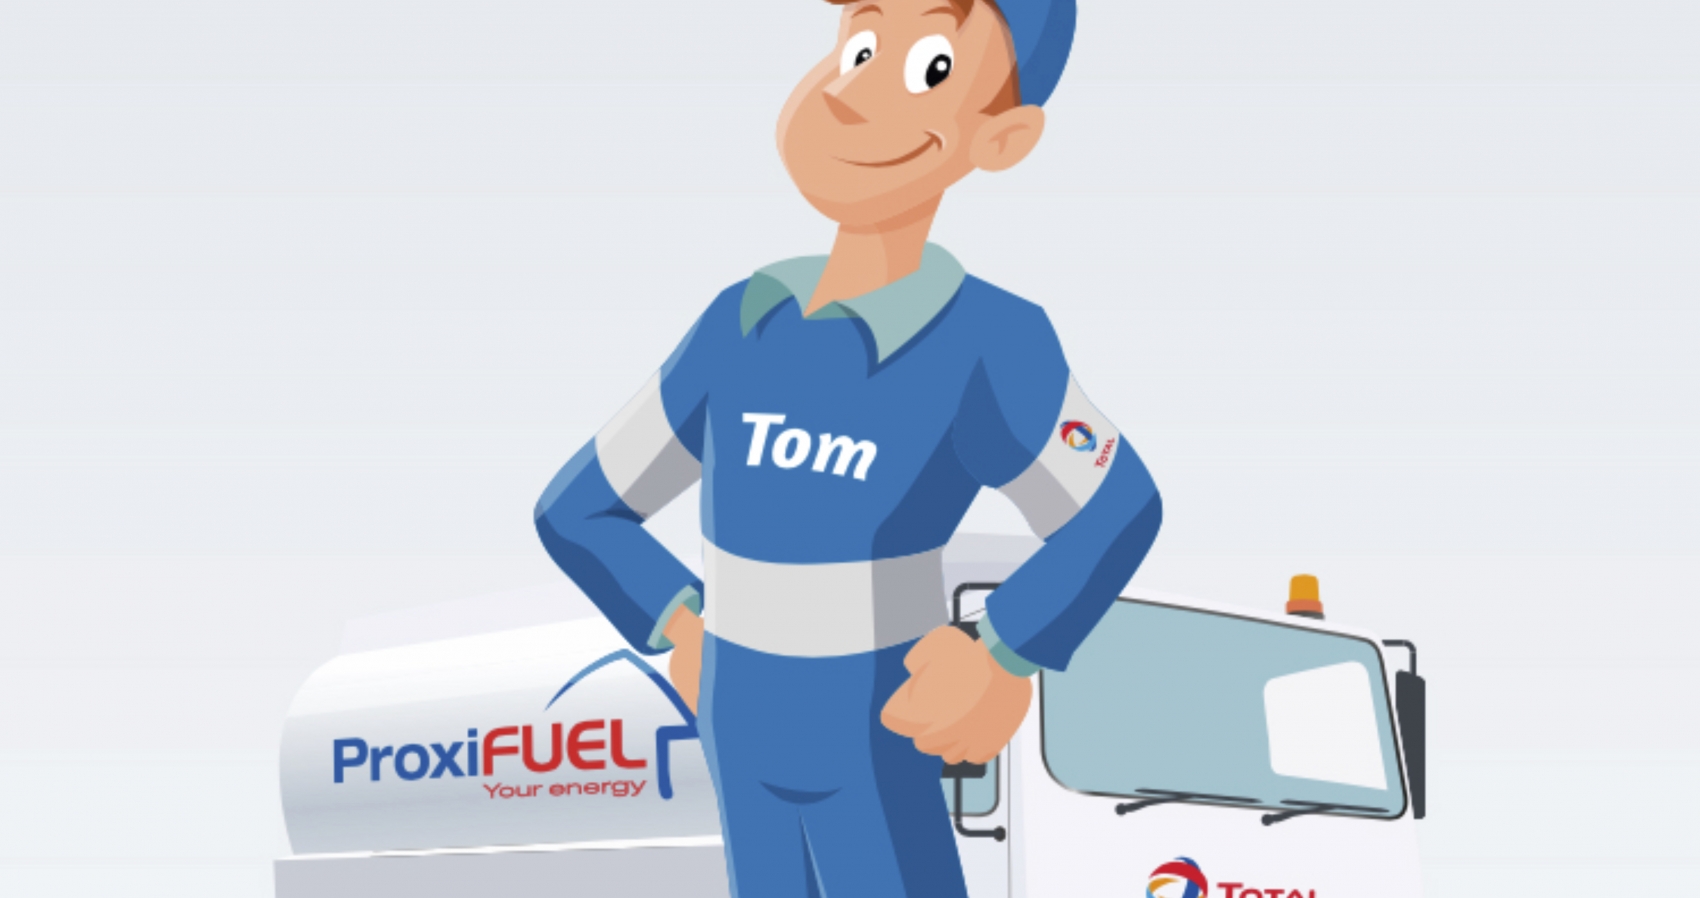 TOTAL Proxifuel Commercial App